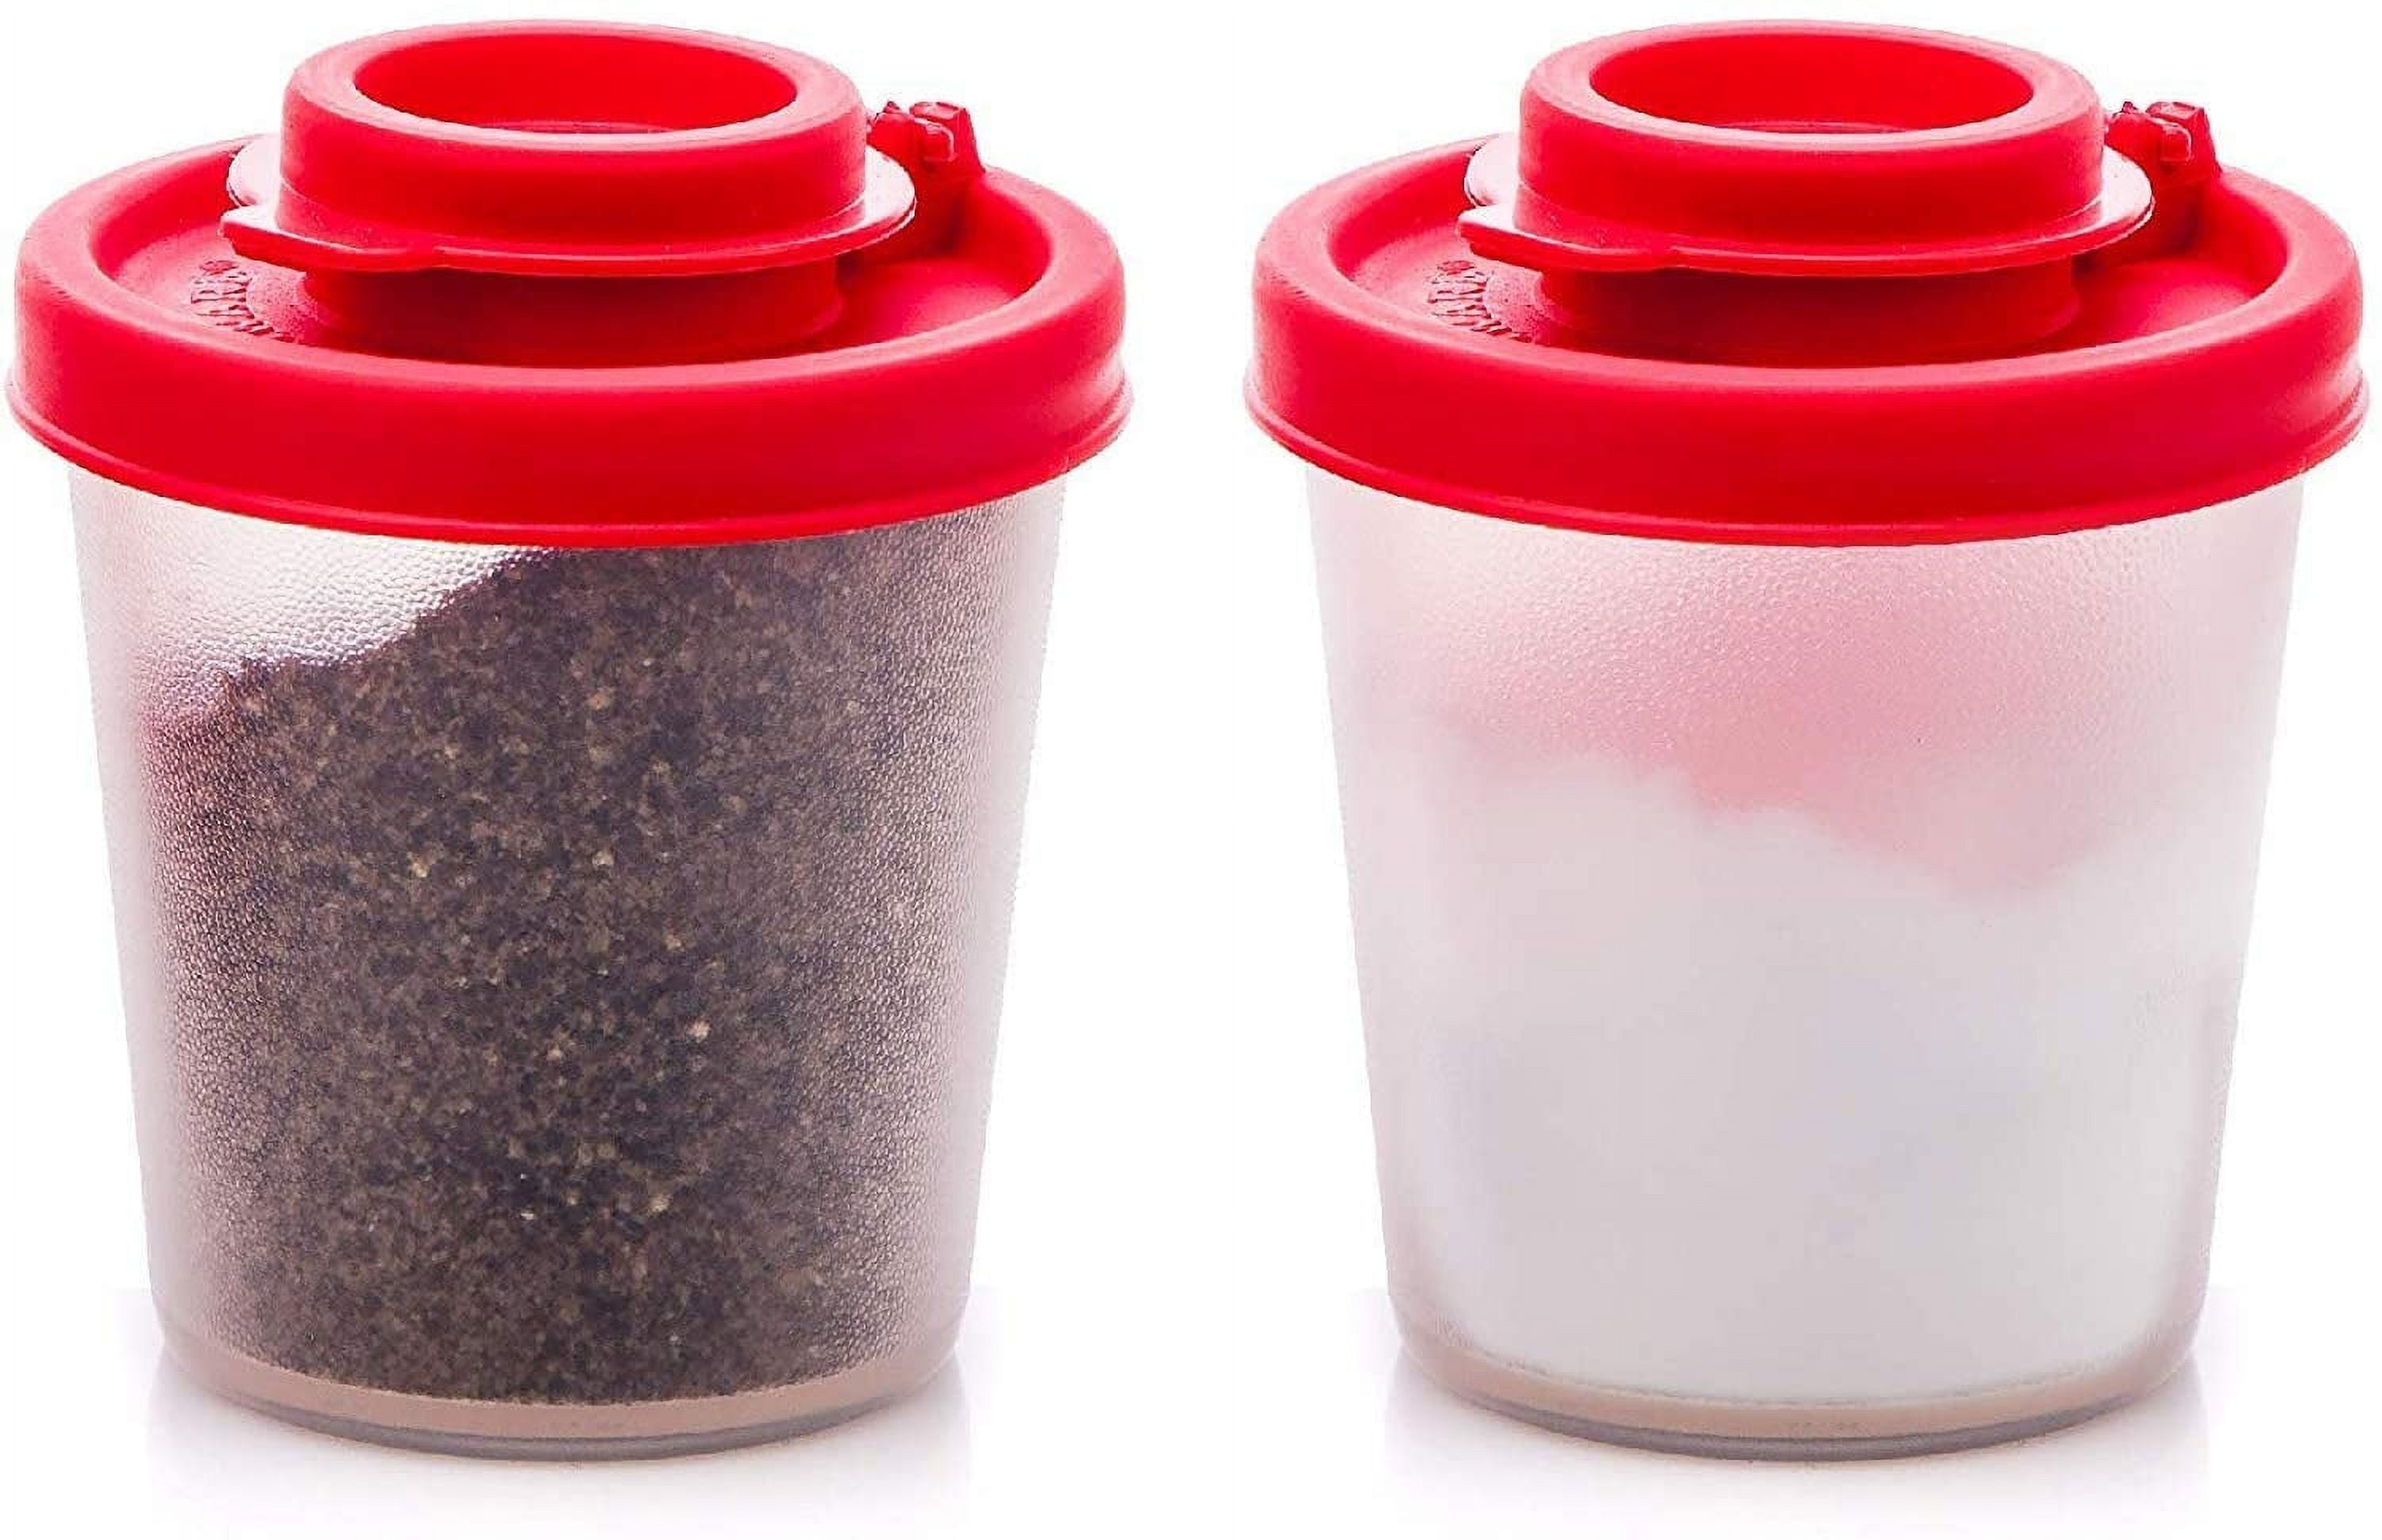 Survival Resources > Cooking > Mini Salt & Pepper Shaker